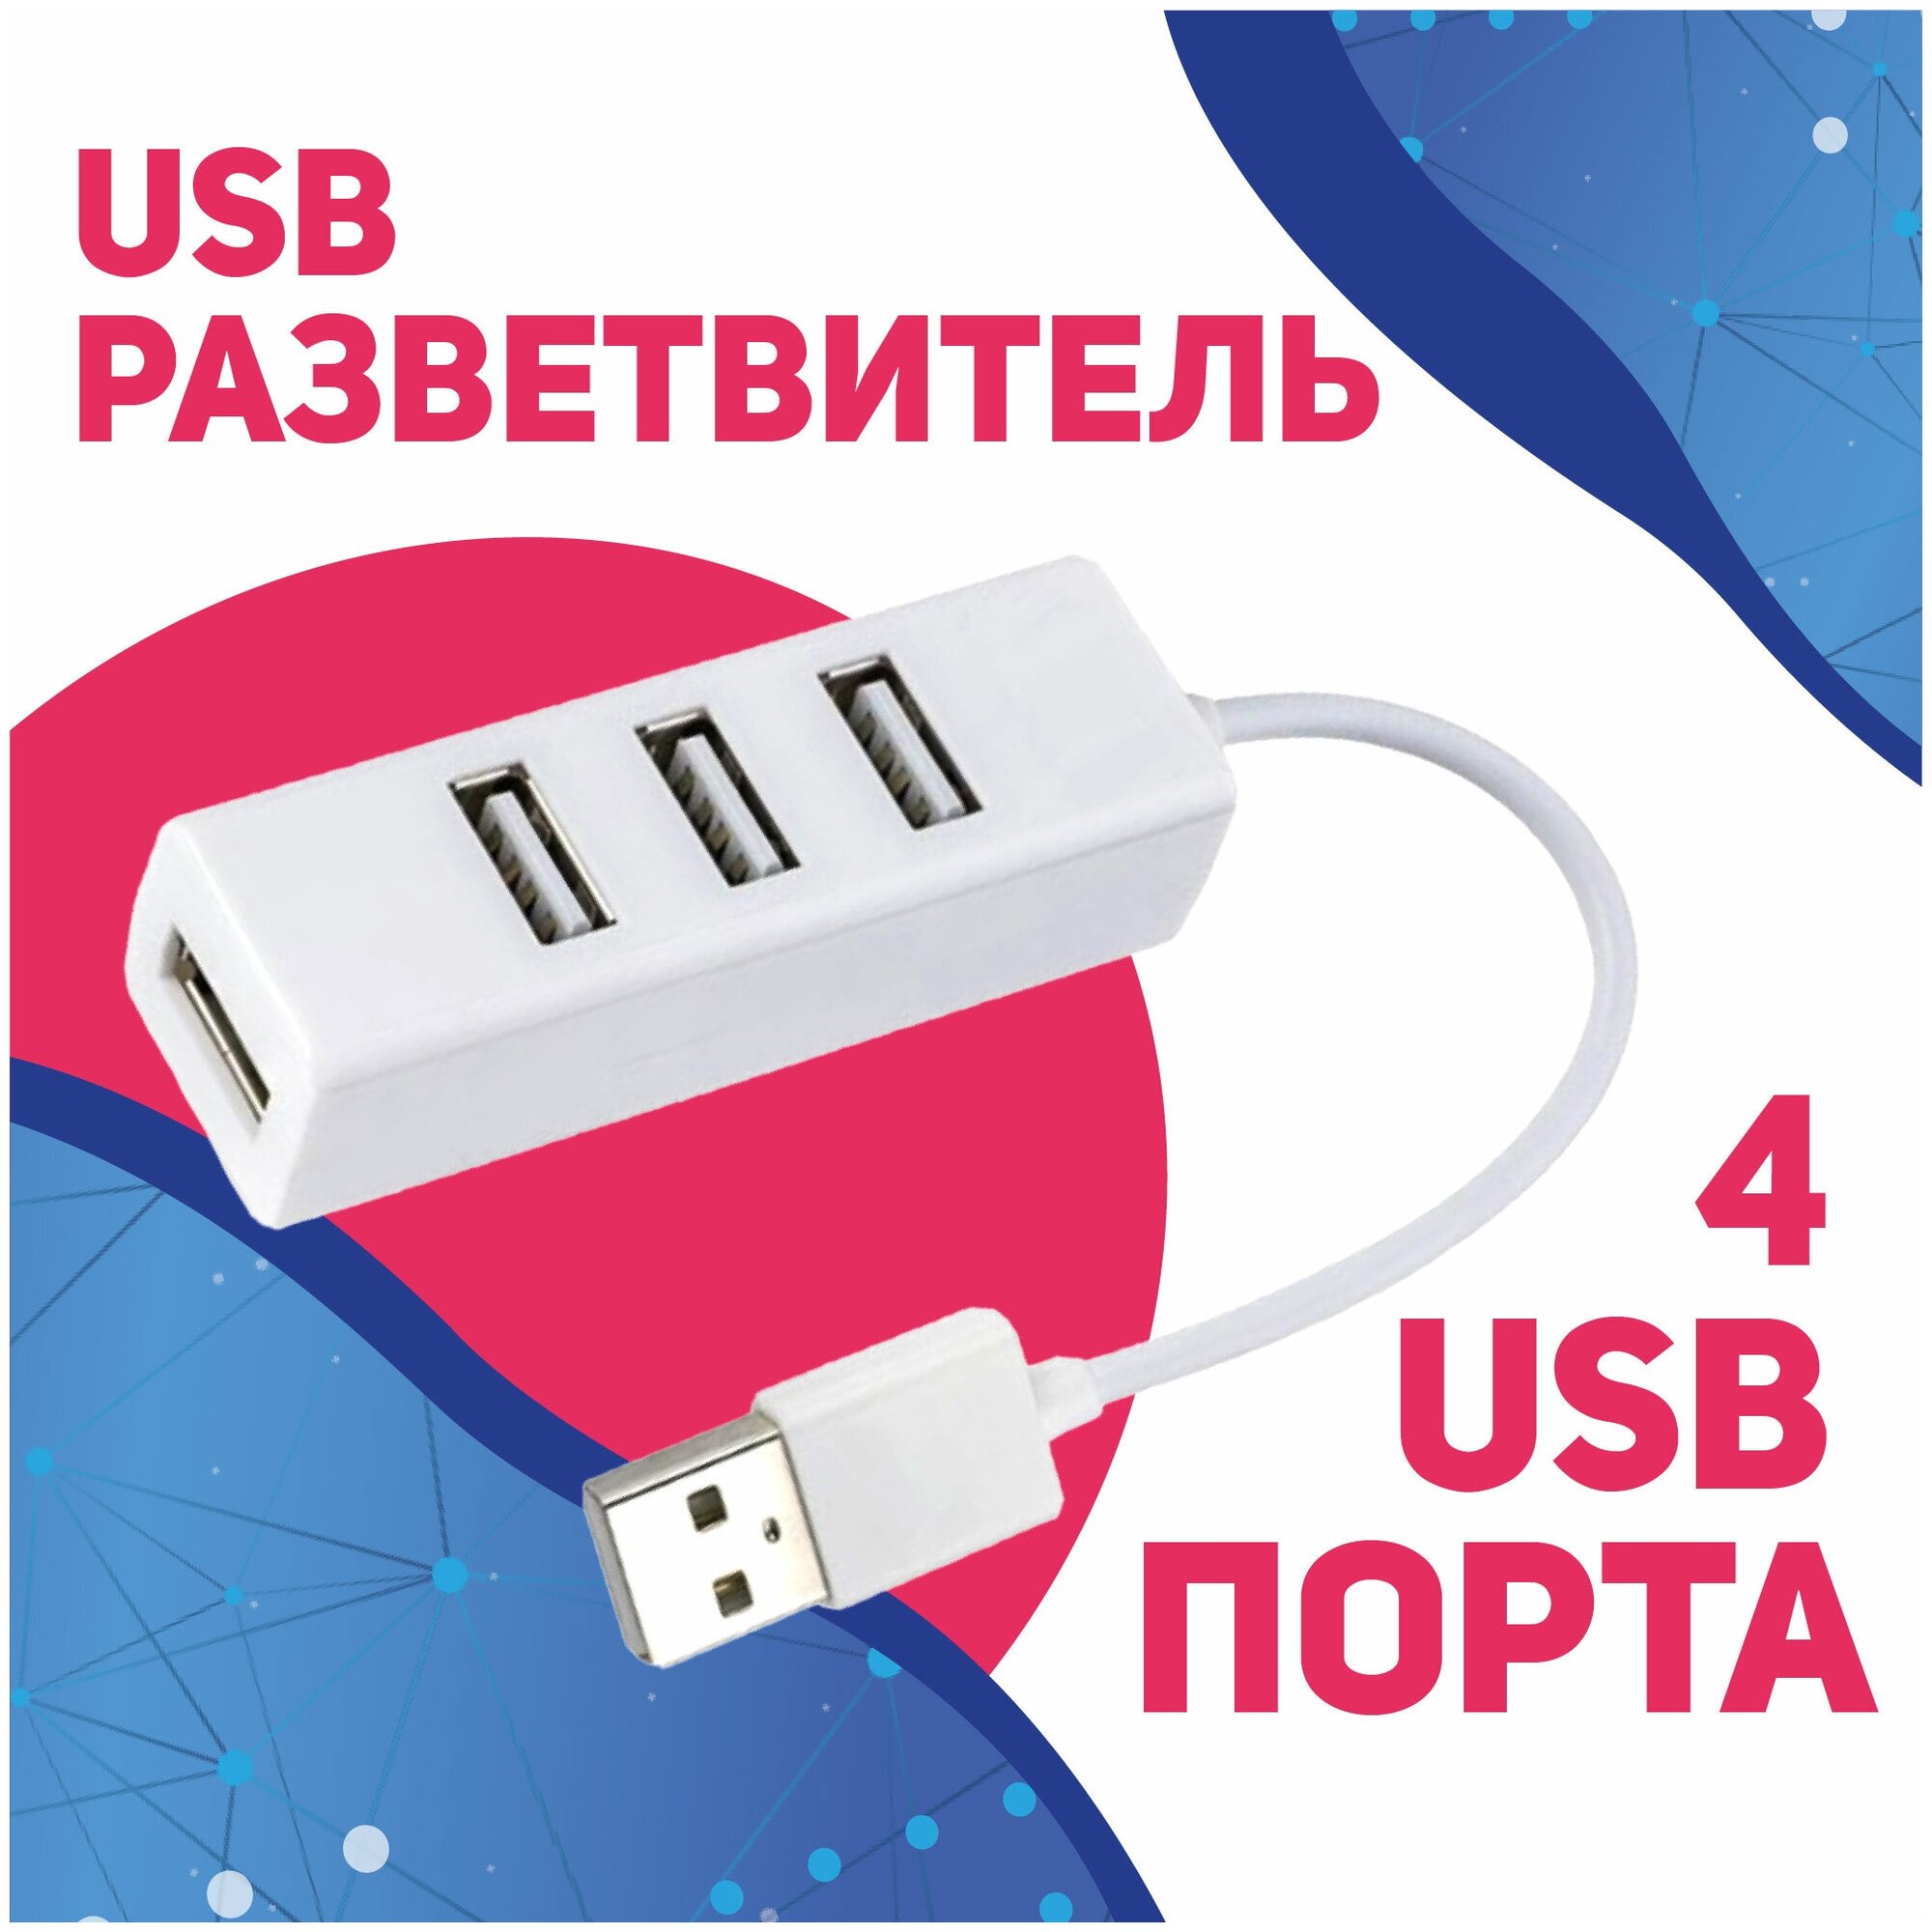 USB-концентратор USB 2.0 на 4 порта 480 Мбит/сек / HUB разветвитель / Хаб на 4 USB (0,1 м) / белый